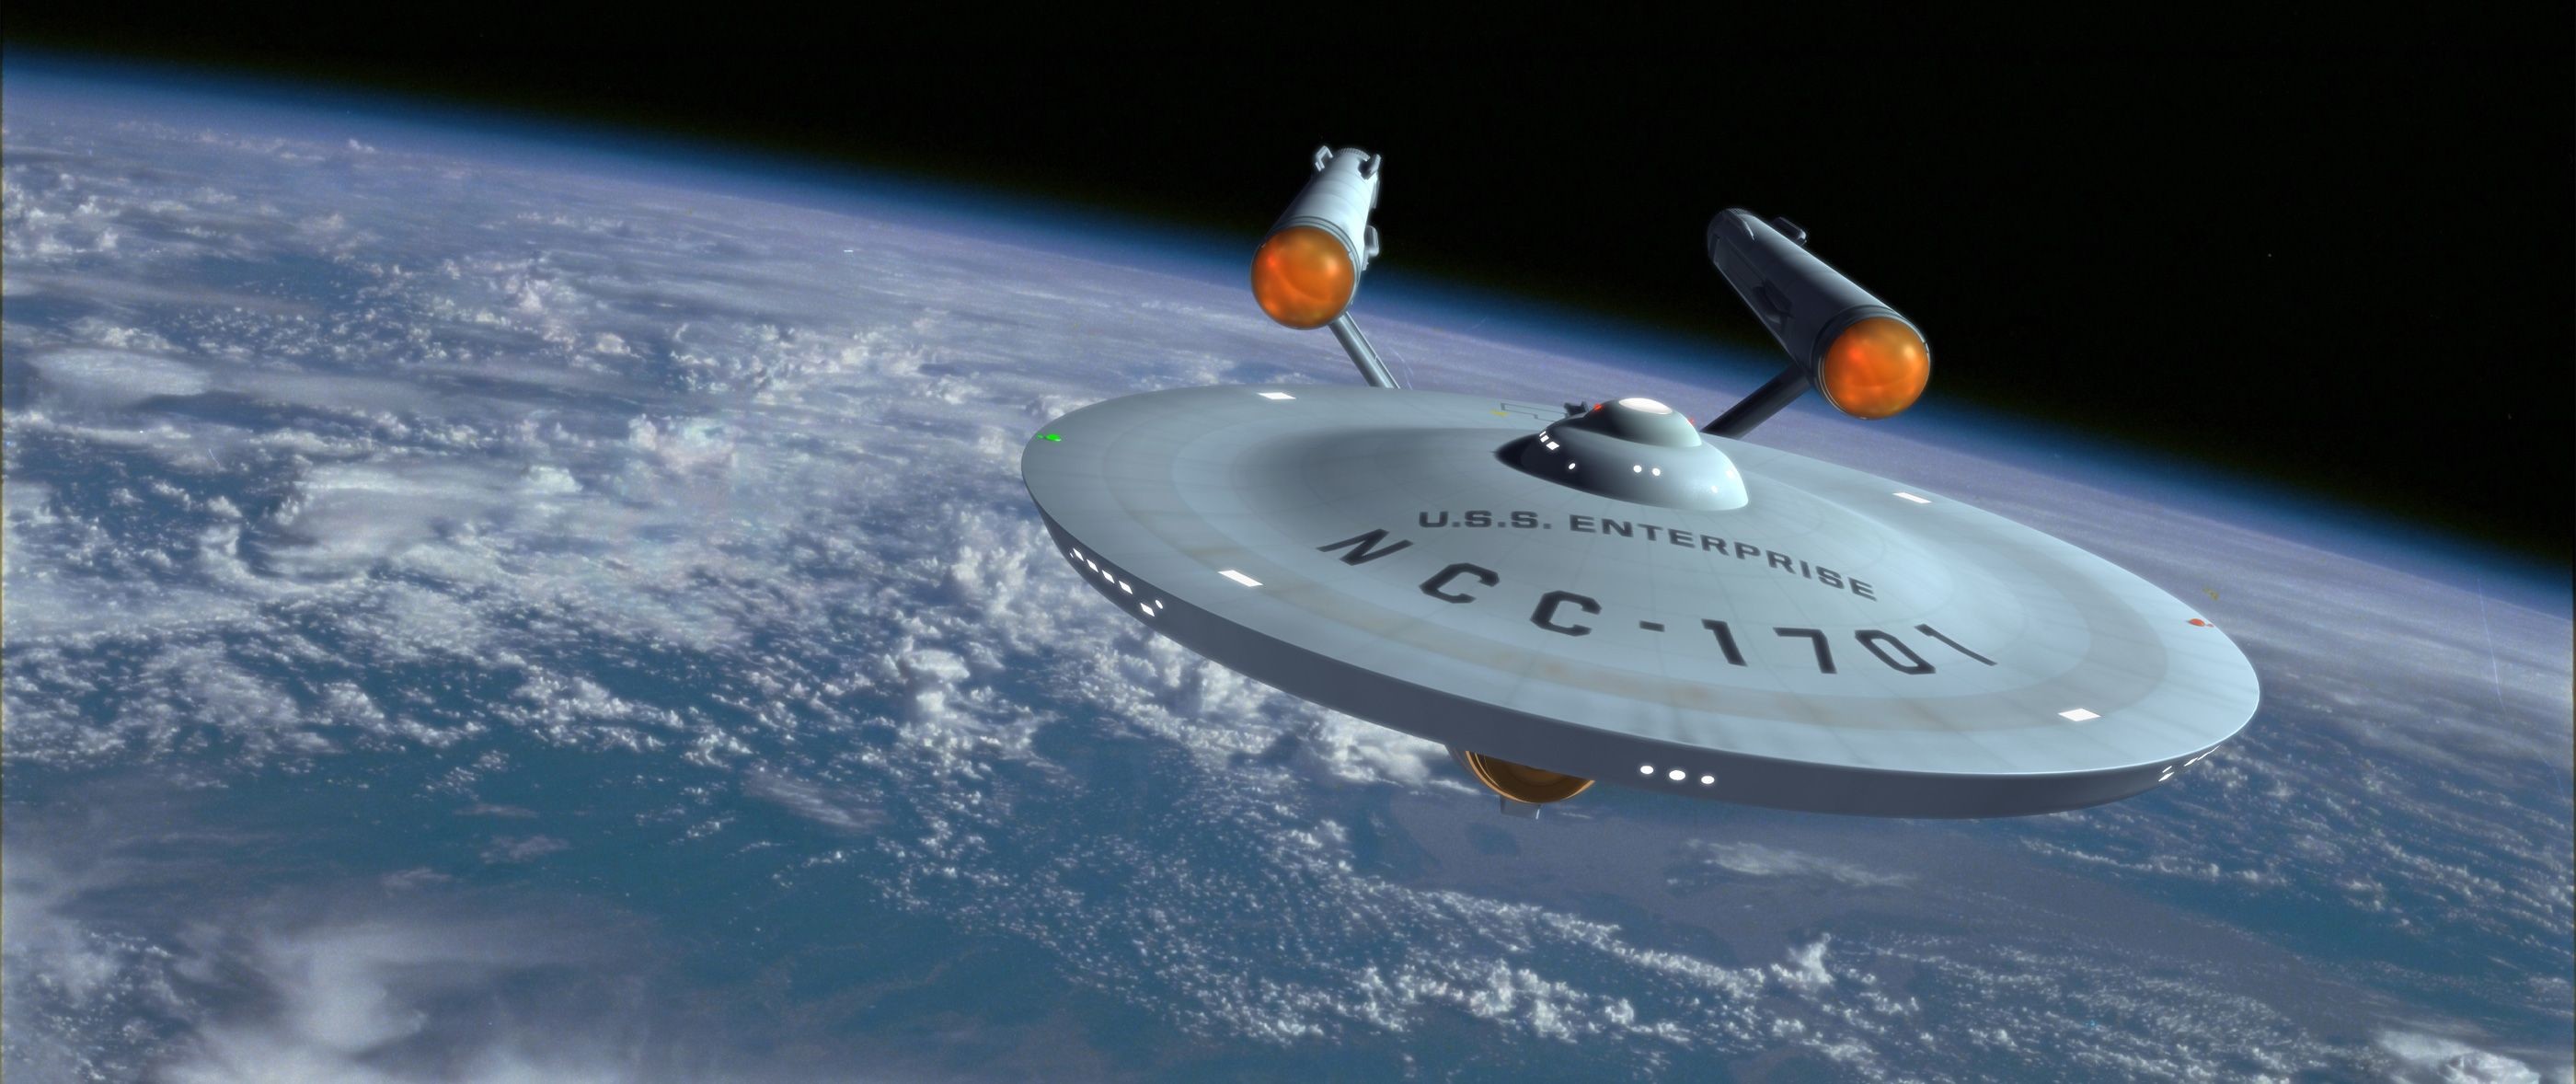 Star Trek Uss Enterprise Ncc 1701 Wallpaper 2800x1178 Wallpaper 